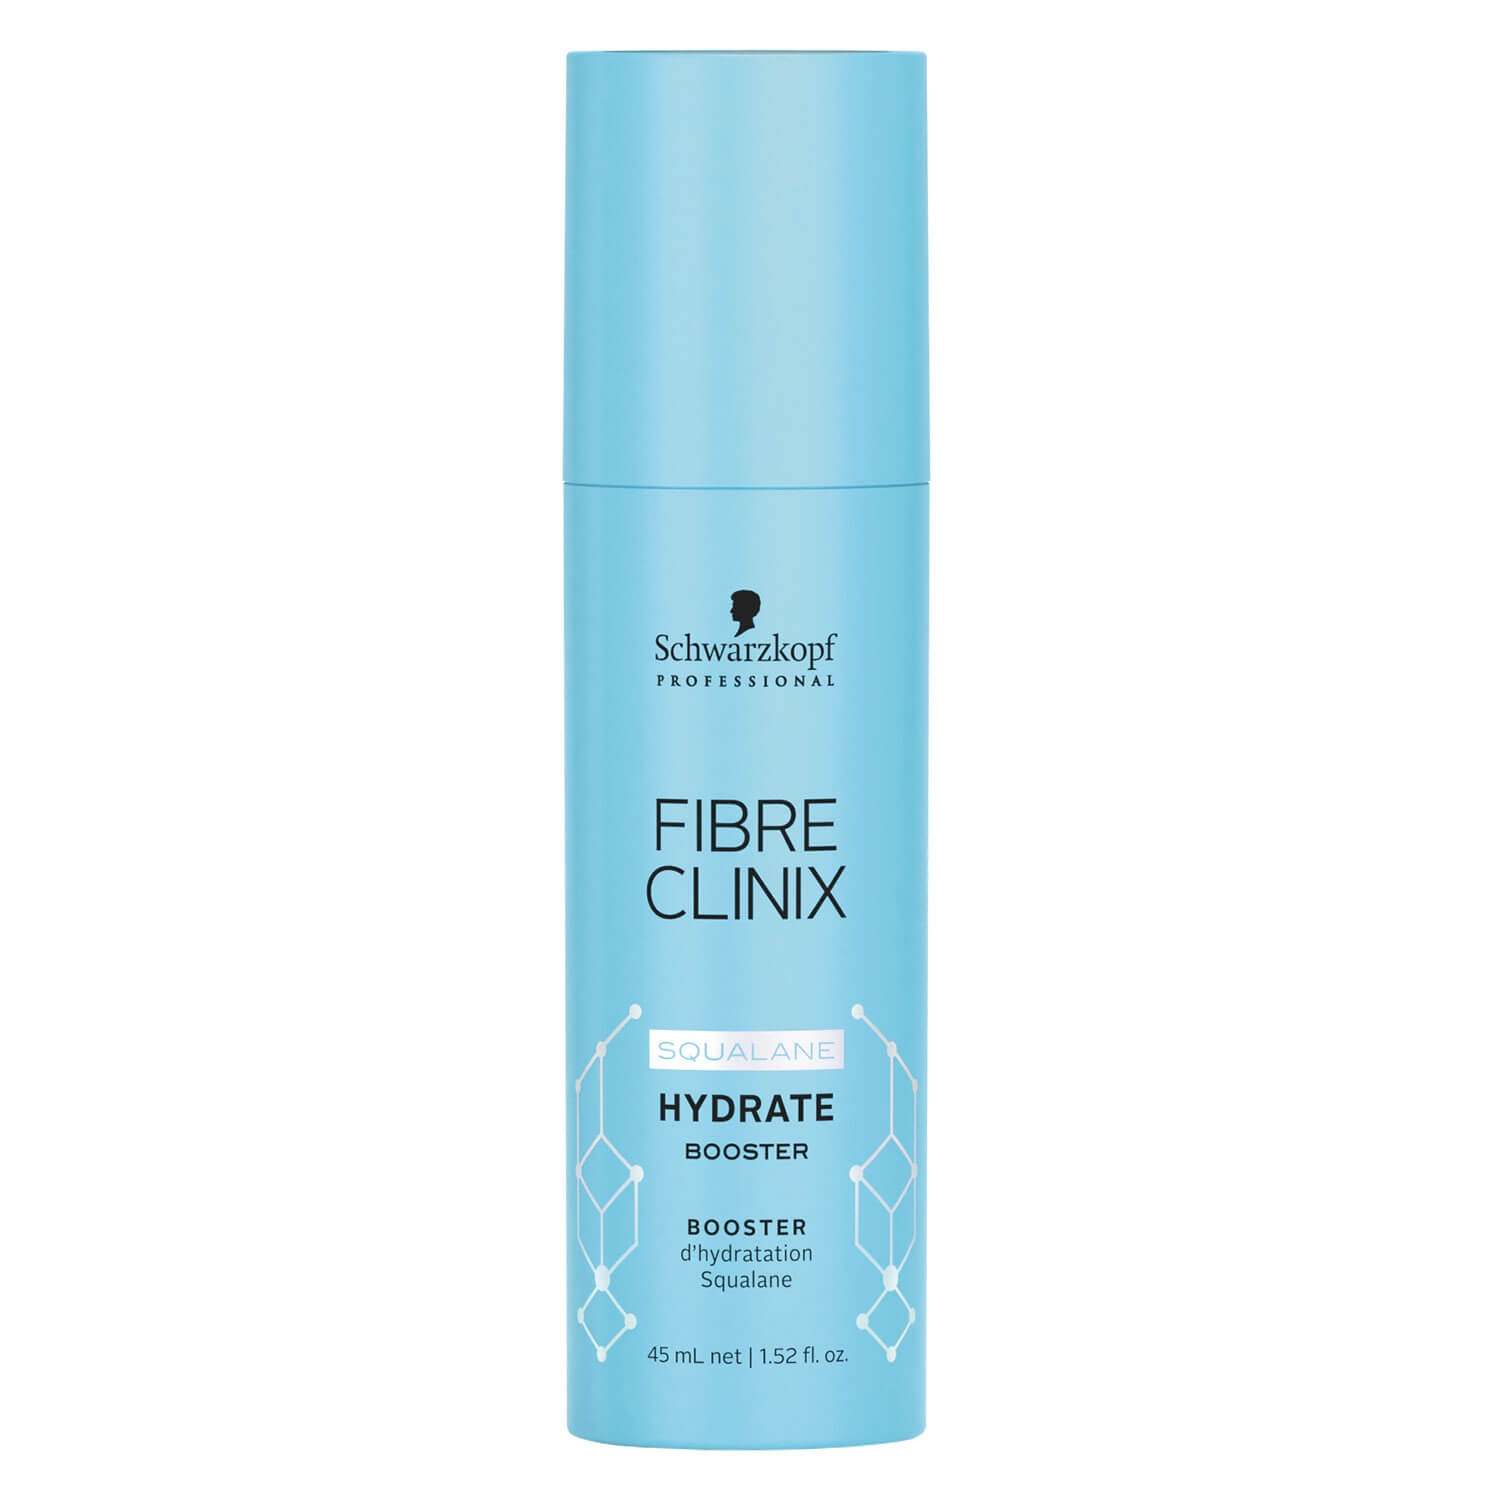 Produktbild von Fibre Clinix - Hydrate Booster Salon Treatment